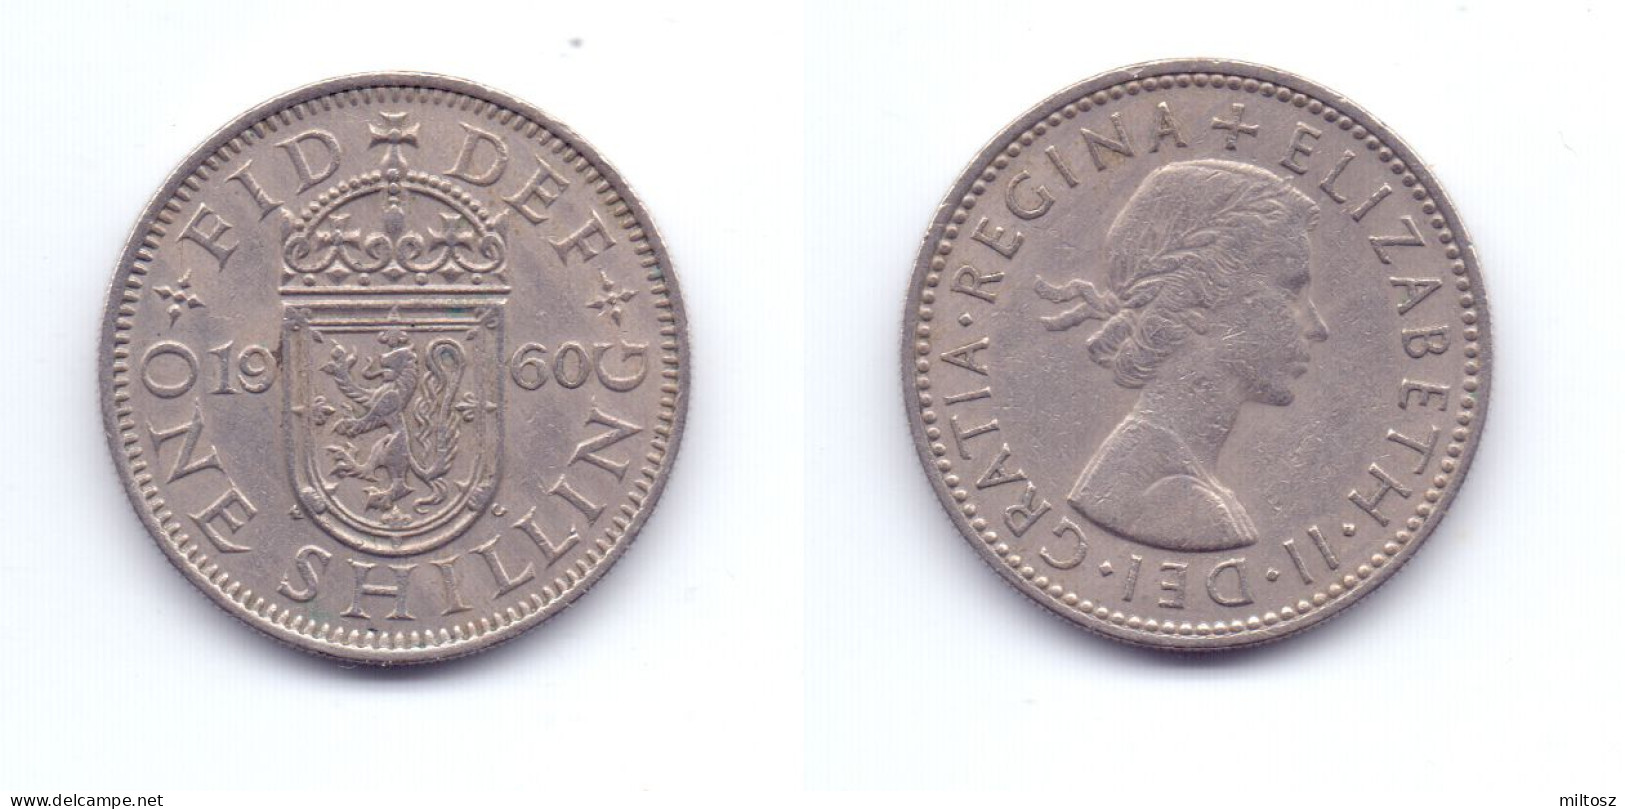 Great Britain 1 Shilling 1960 Scottish Crest - I. 1 Shilling